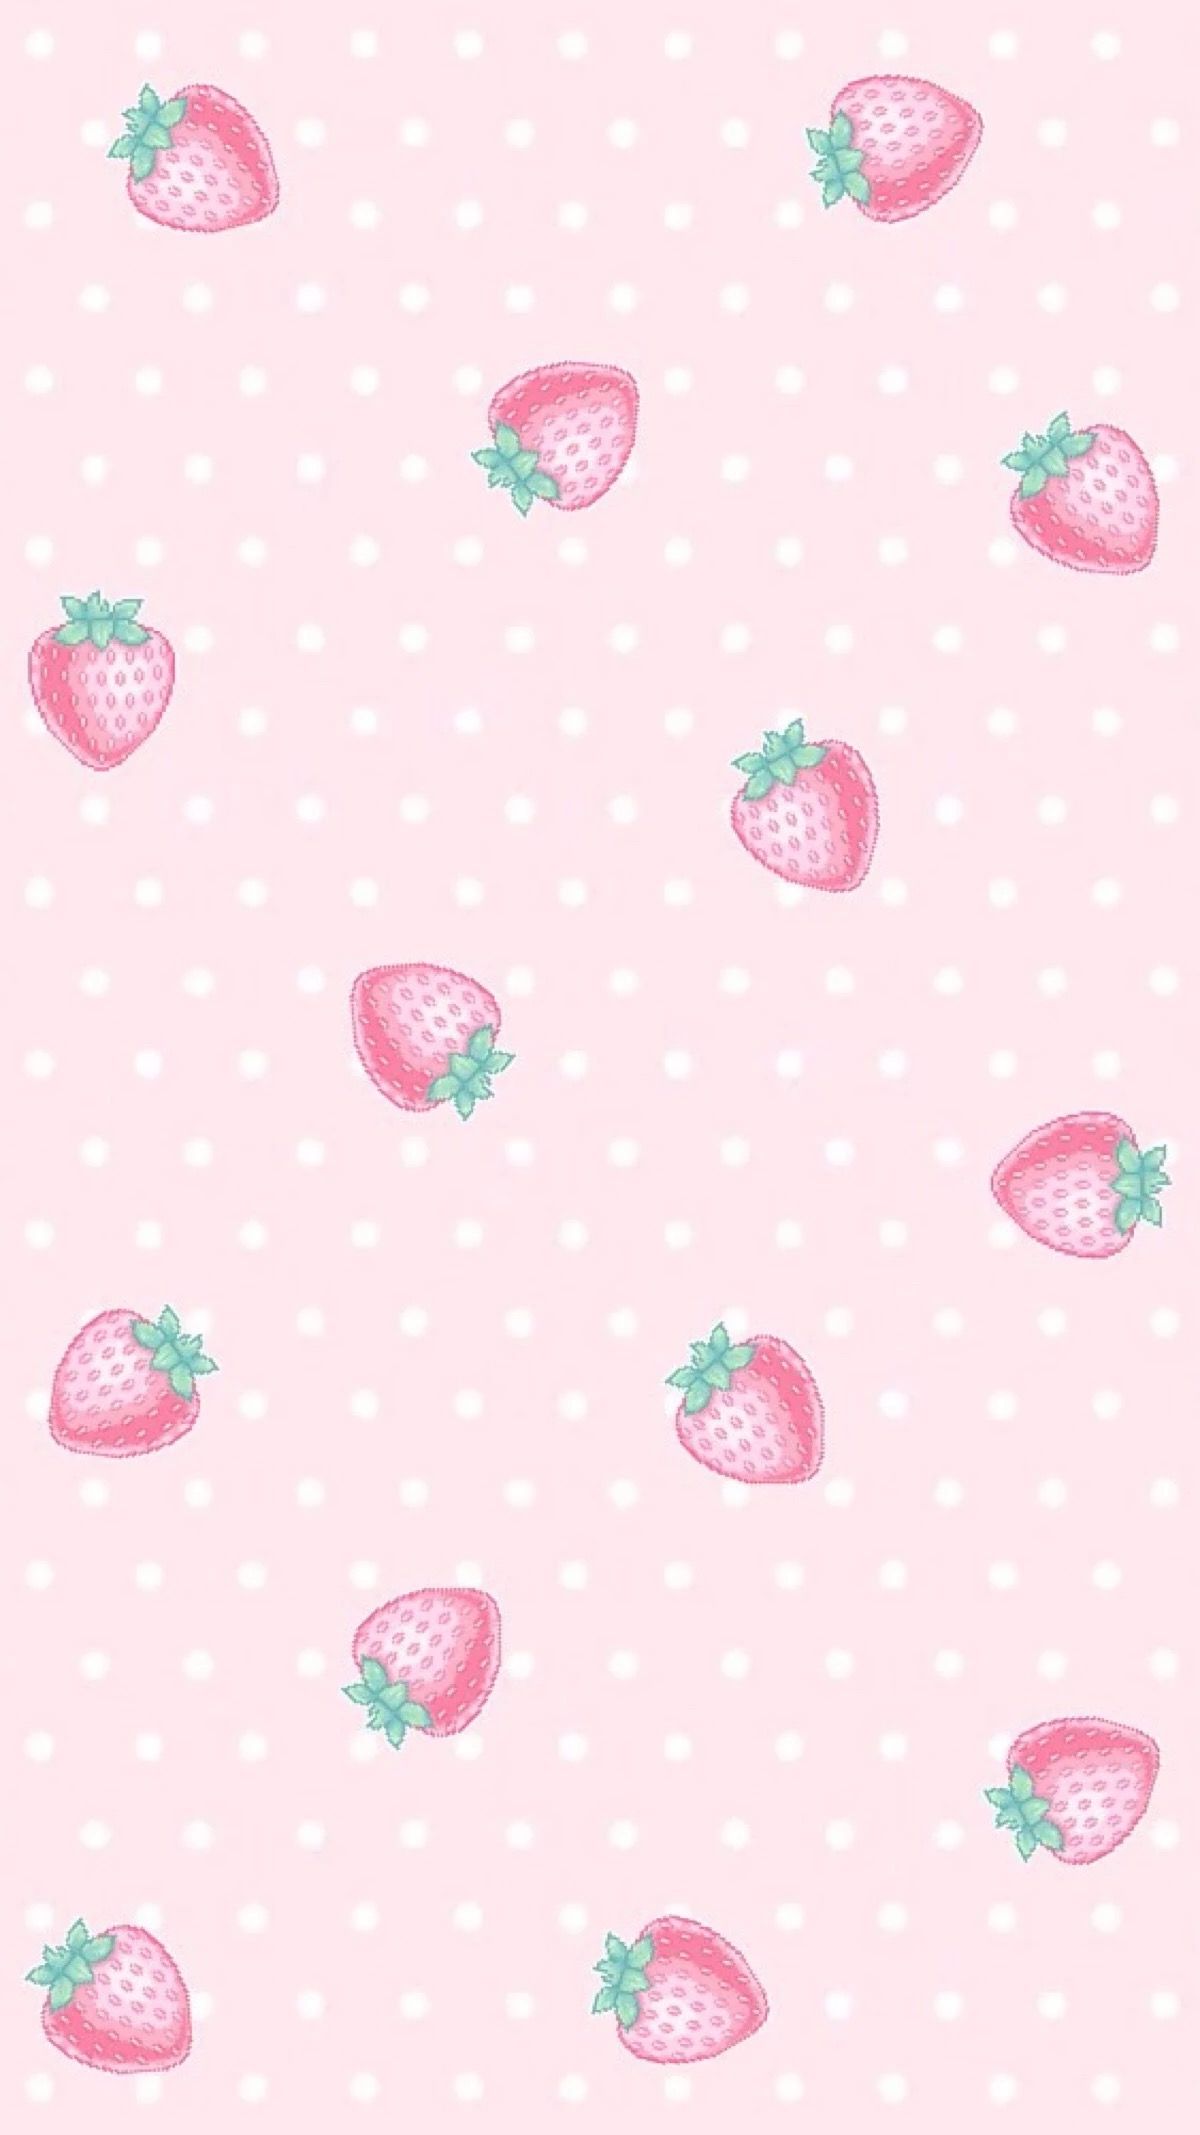 Desktop Kawaii Strawberry Milk Wallpapers - Wallpaper Cave